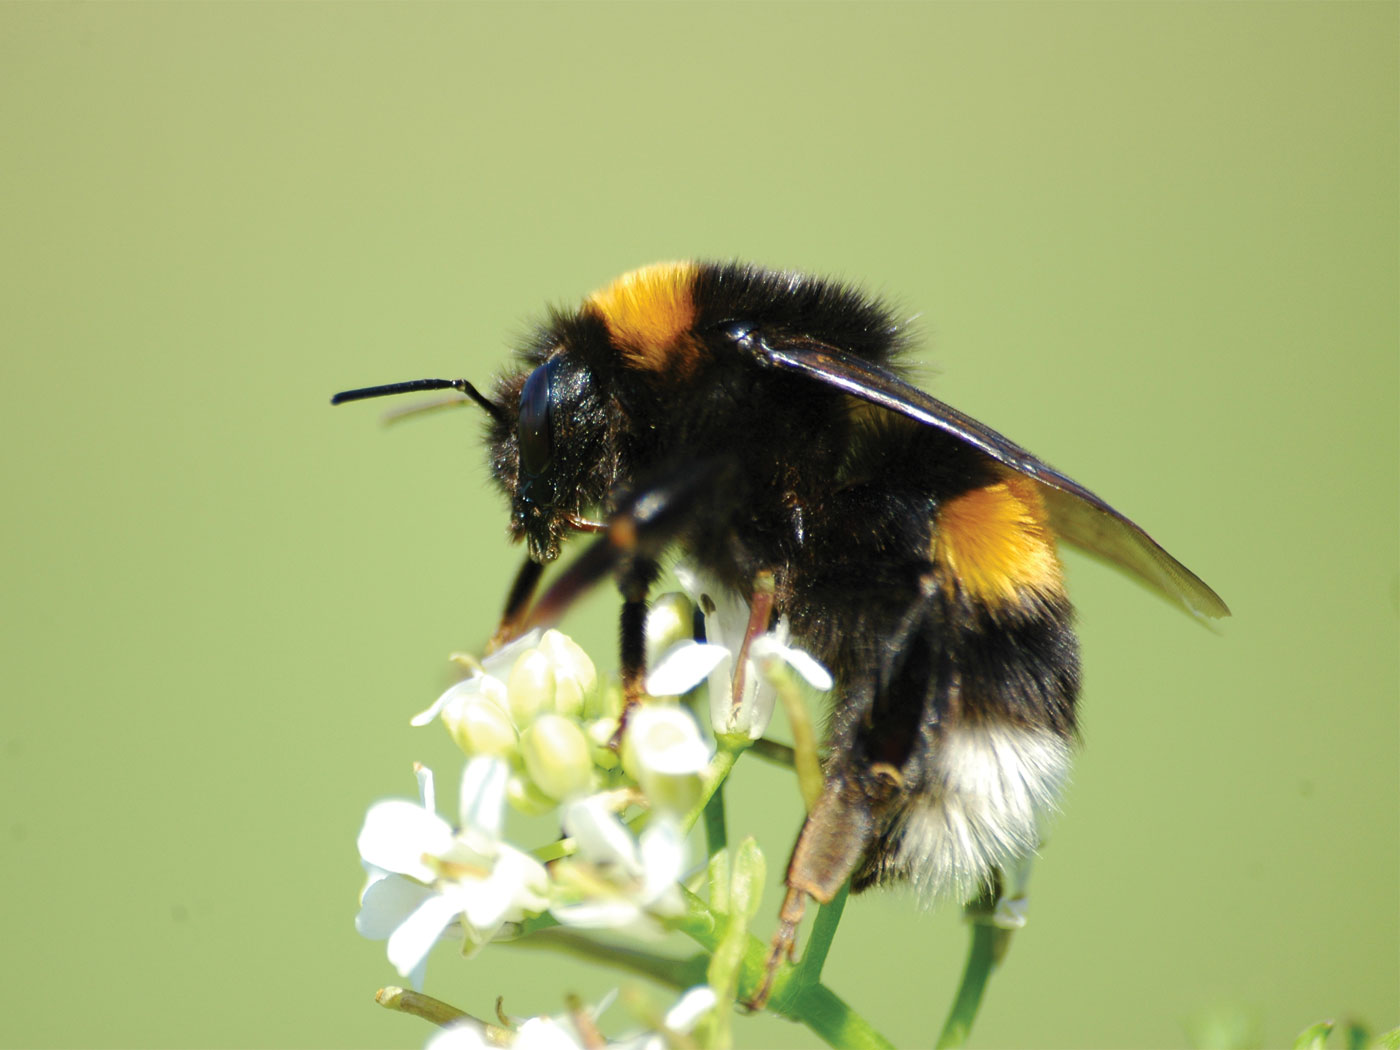 Bees Master Complex Tasks Through Social Interaction